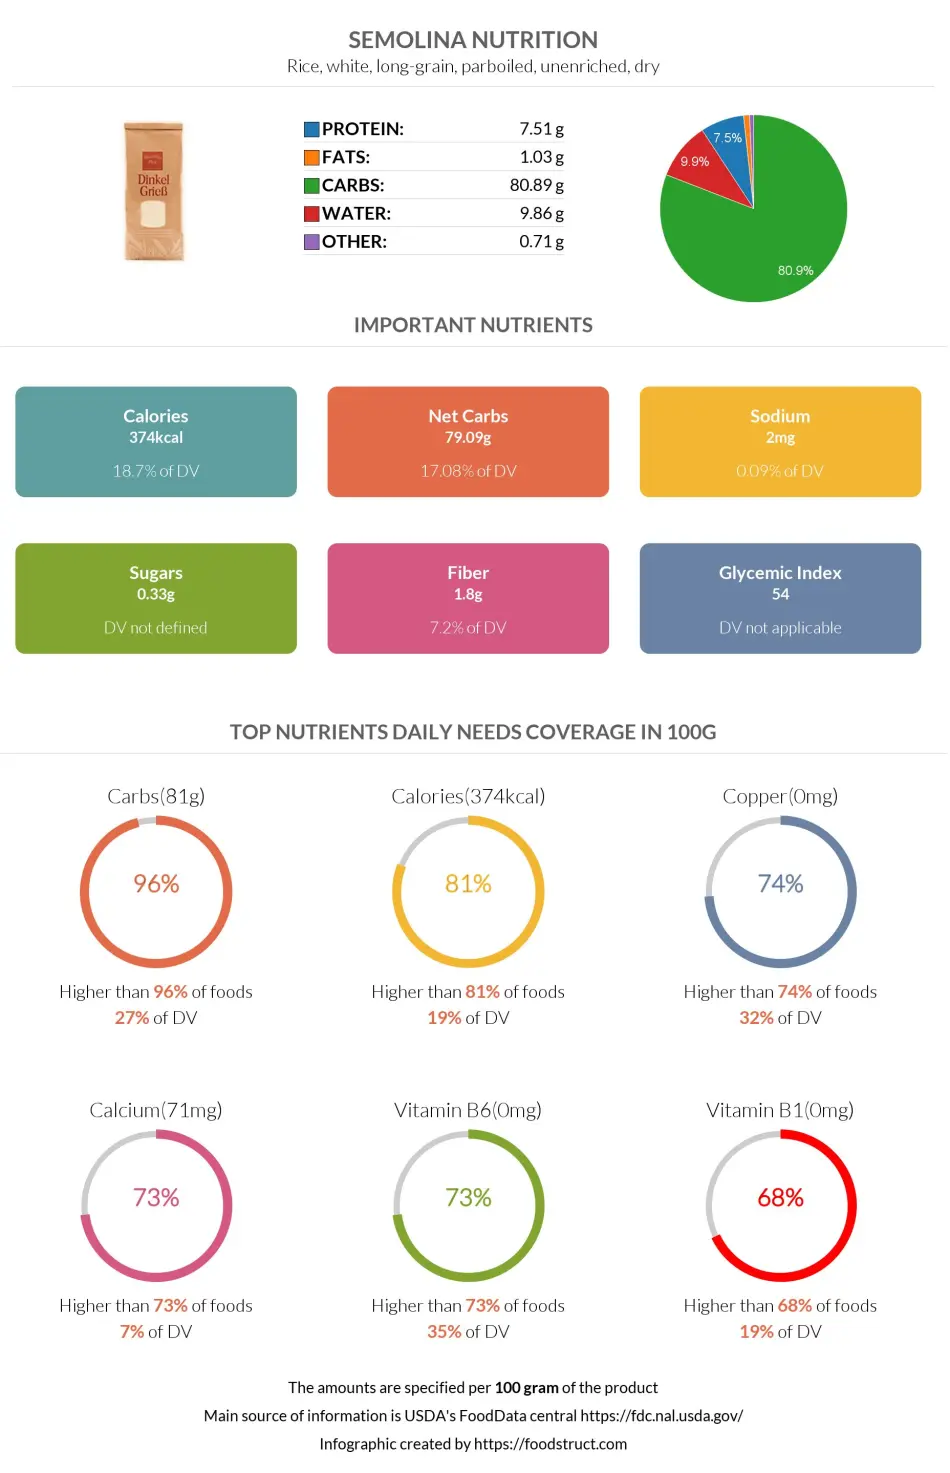 Semolina nutrition infographic